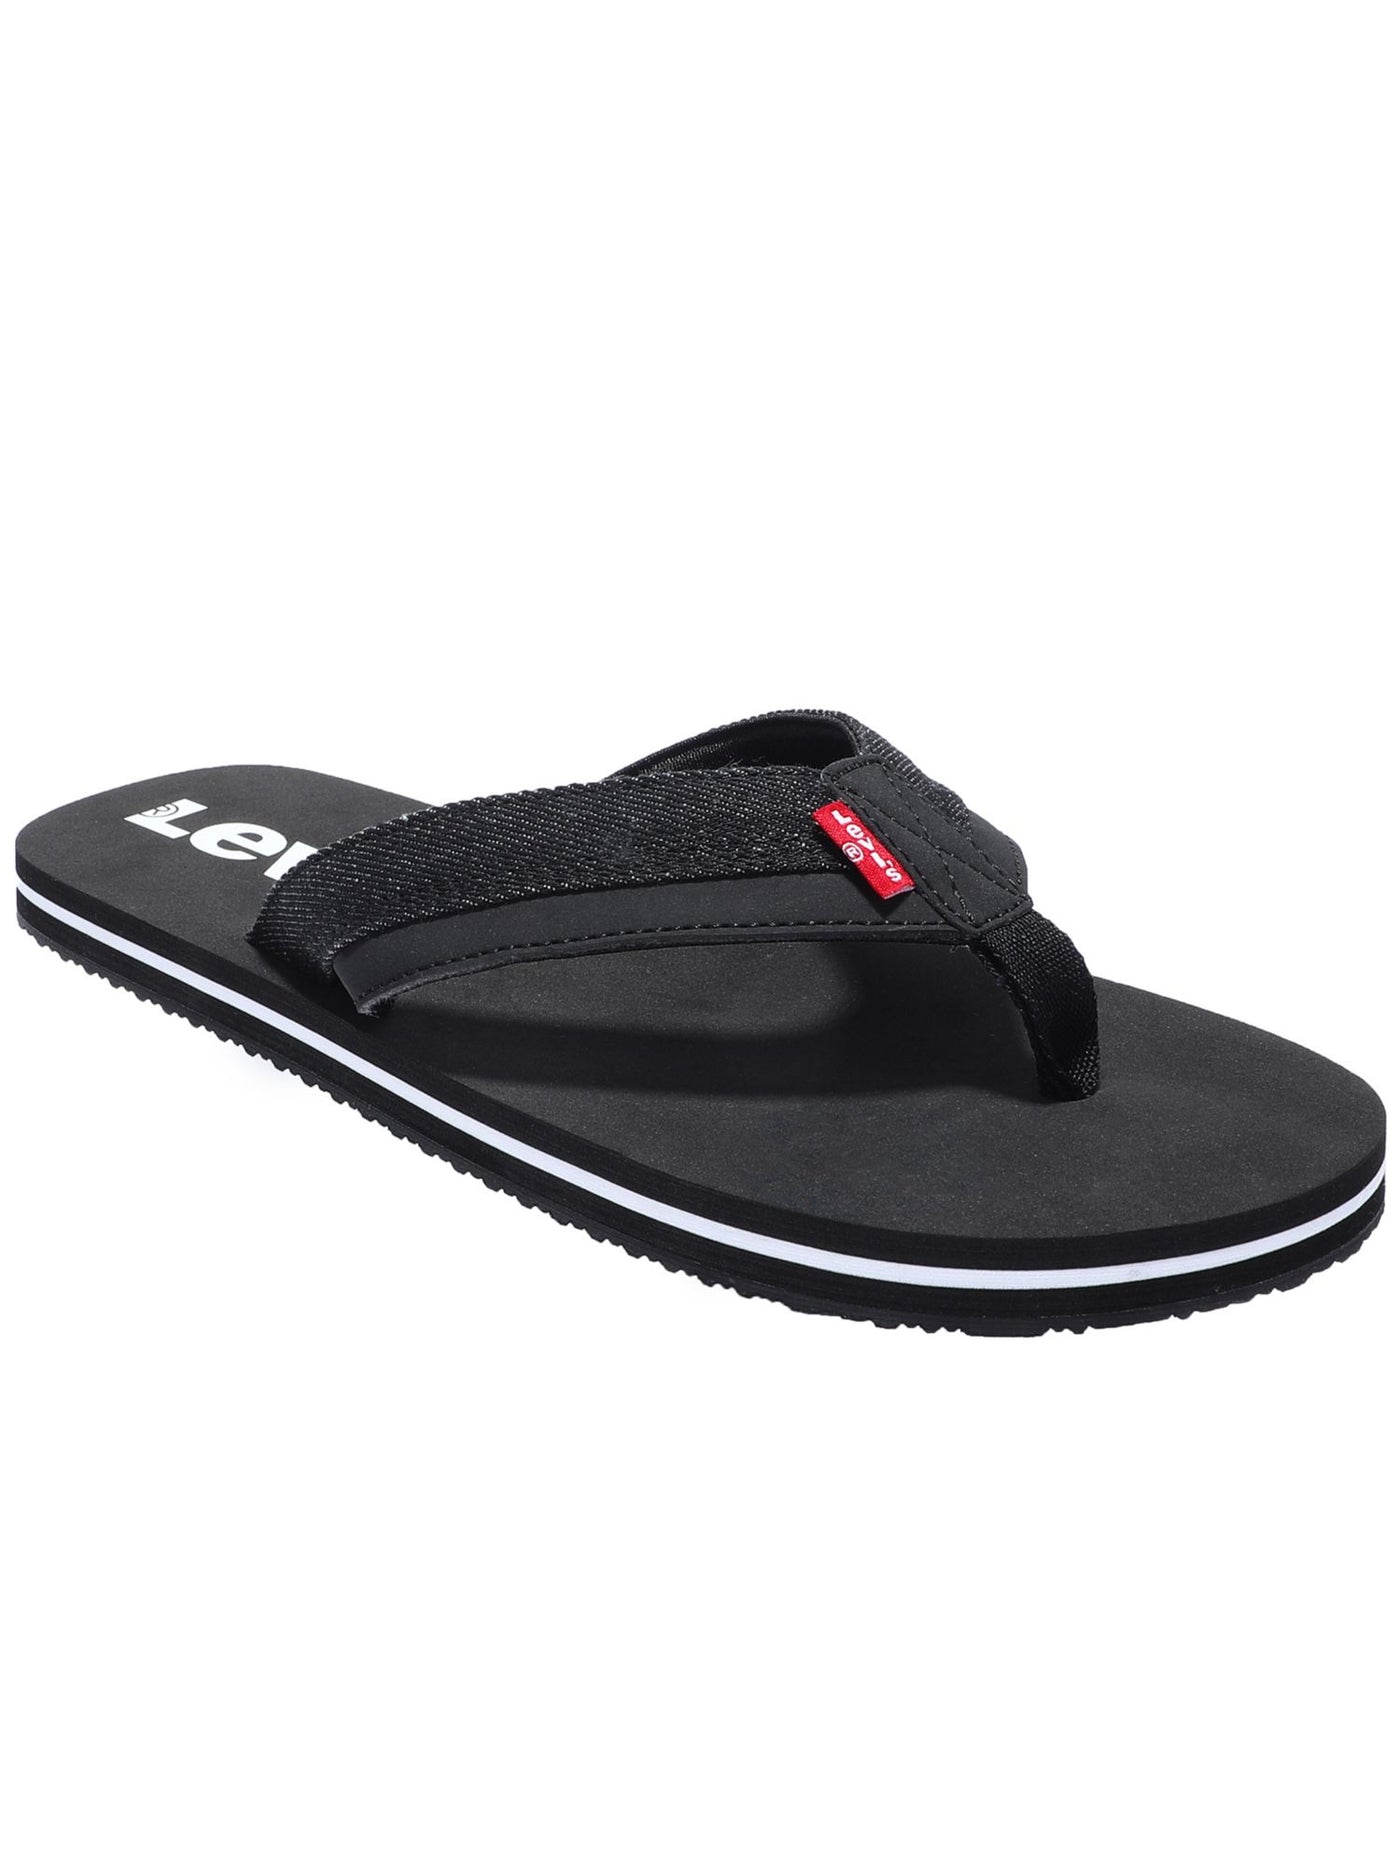 LEVI'S Mens Black Mixed Media Padded Wordmark Round Toe Slip On Thong Sandals Shoes 13